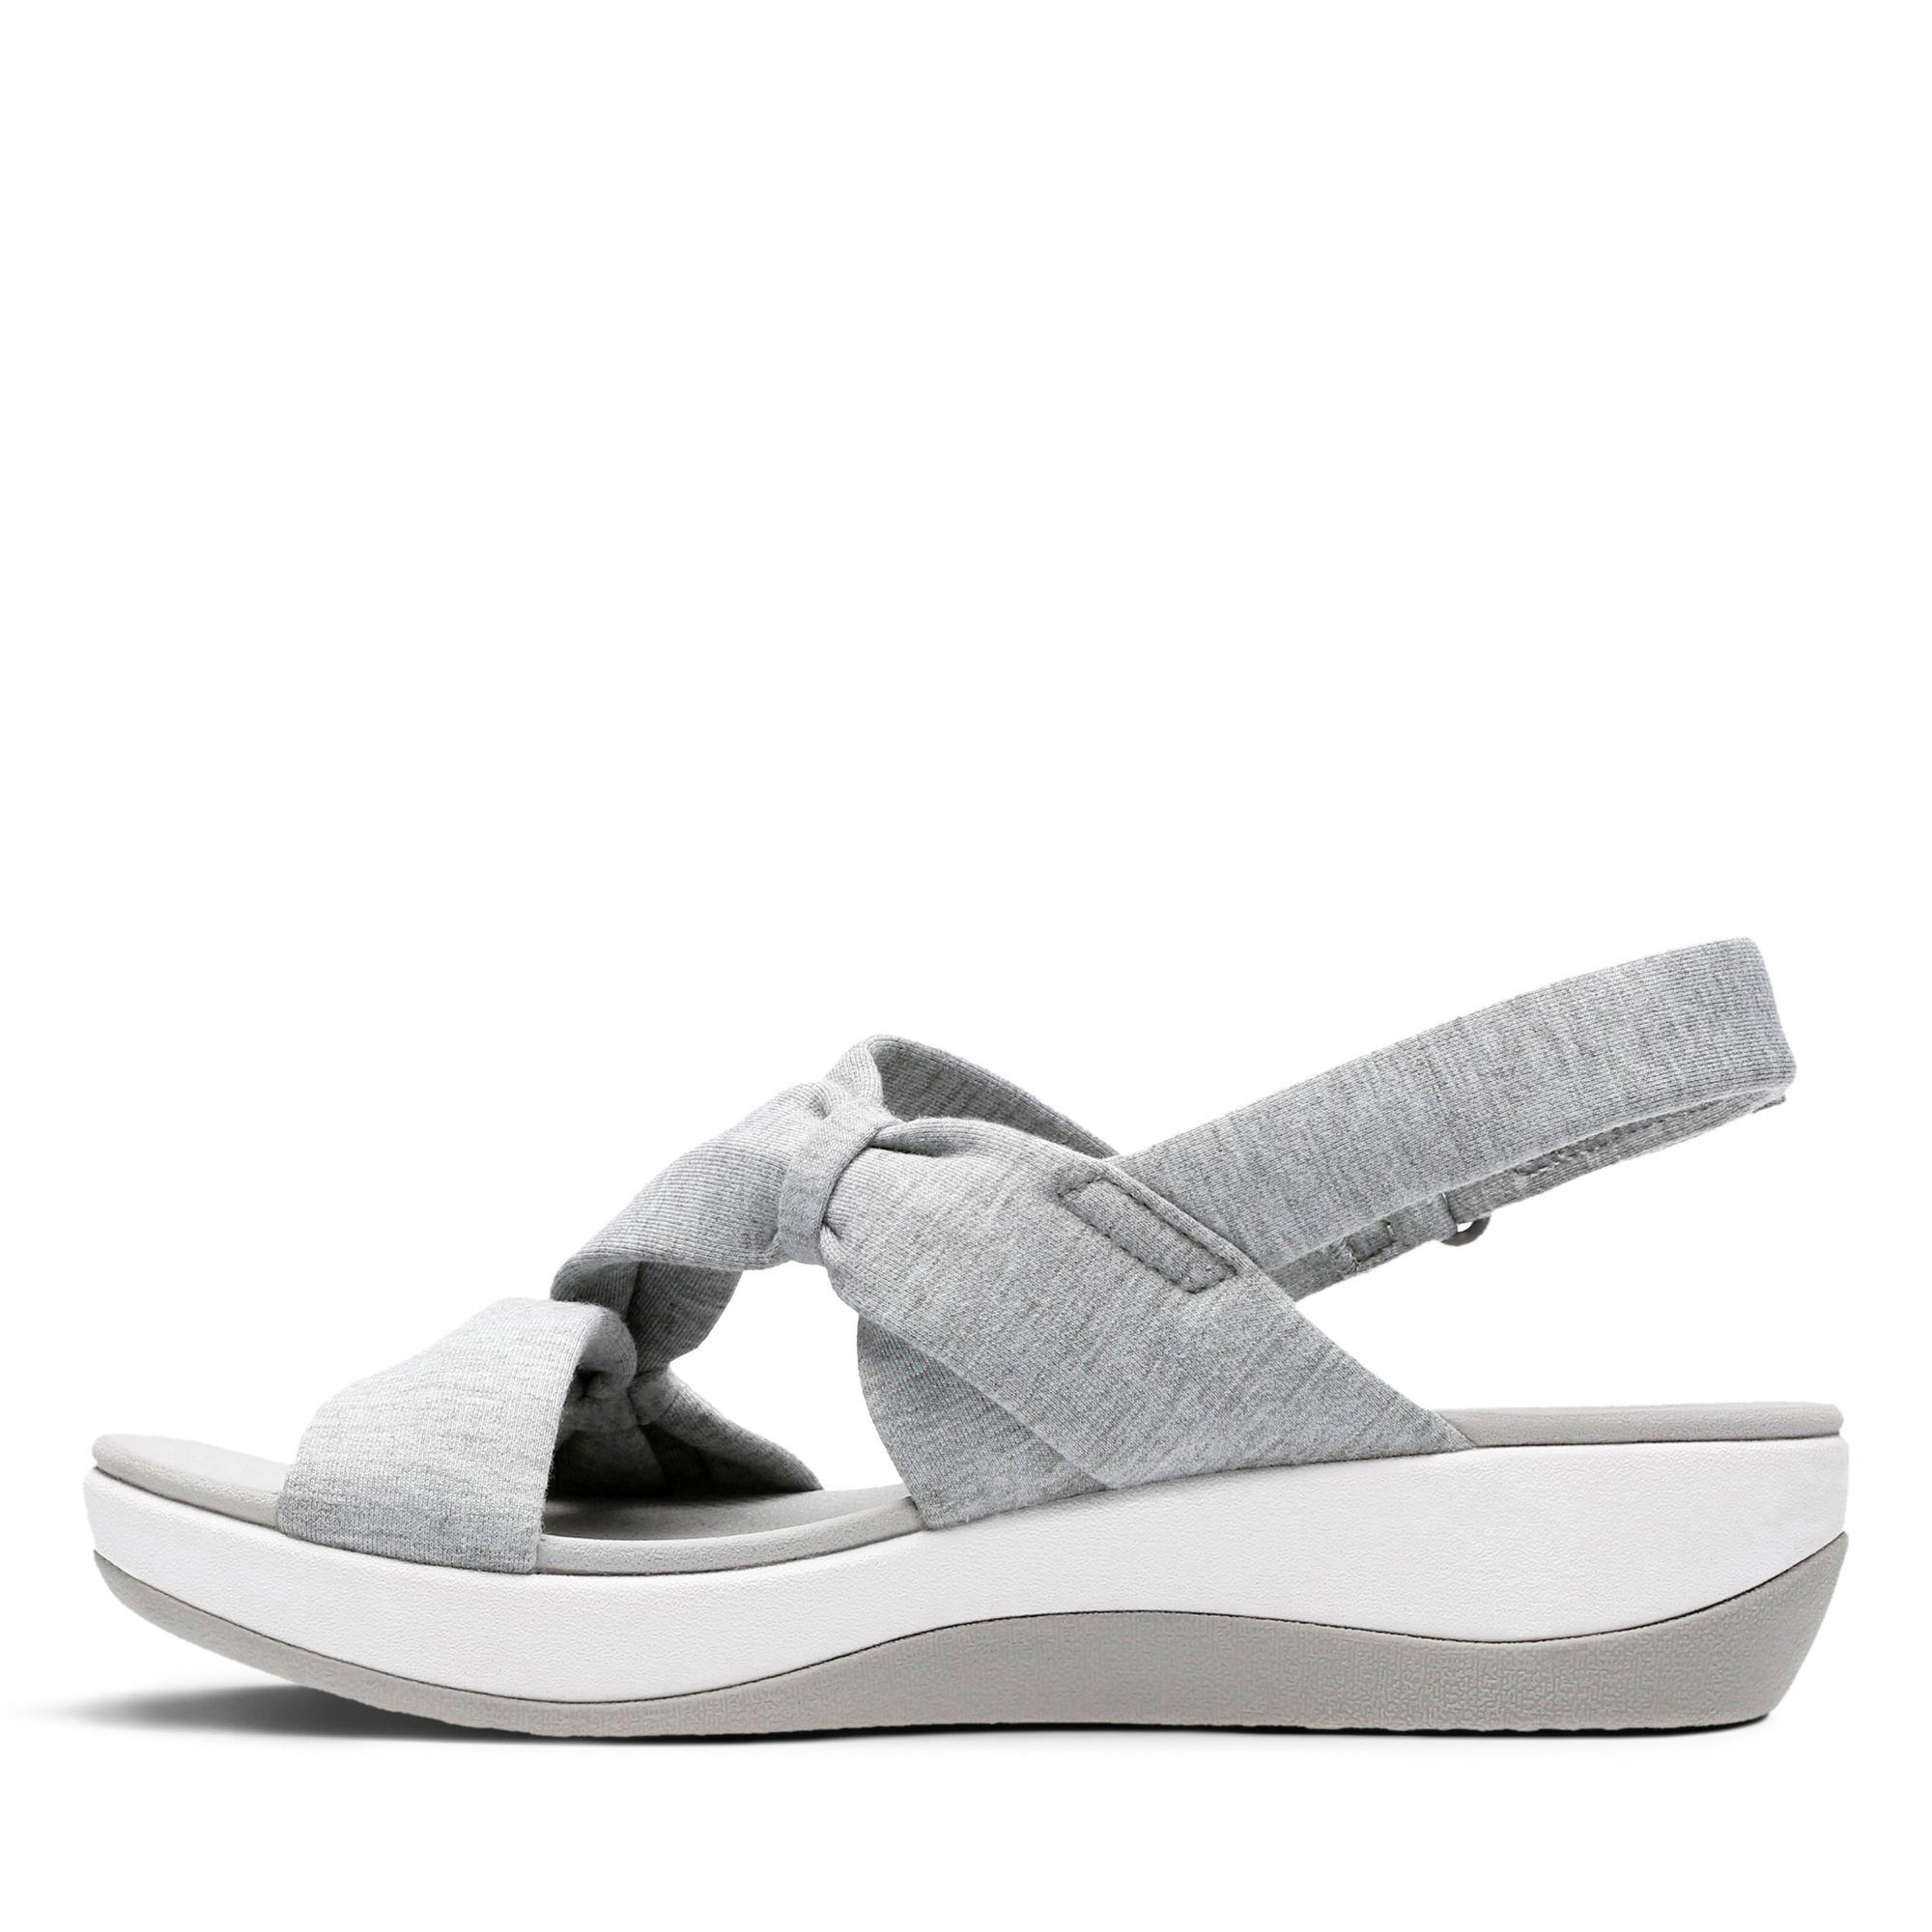 Clarks Arla Primrose Sandal in Grey (Gray) - Save 55% - Lyst